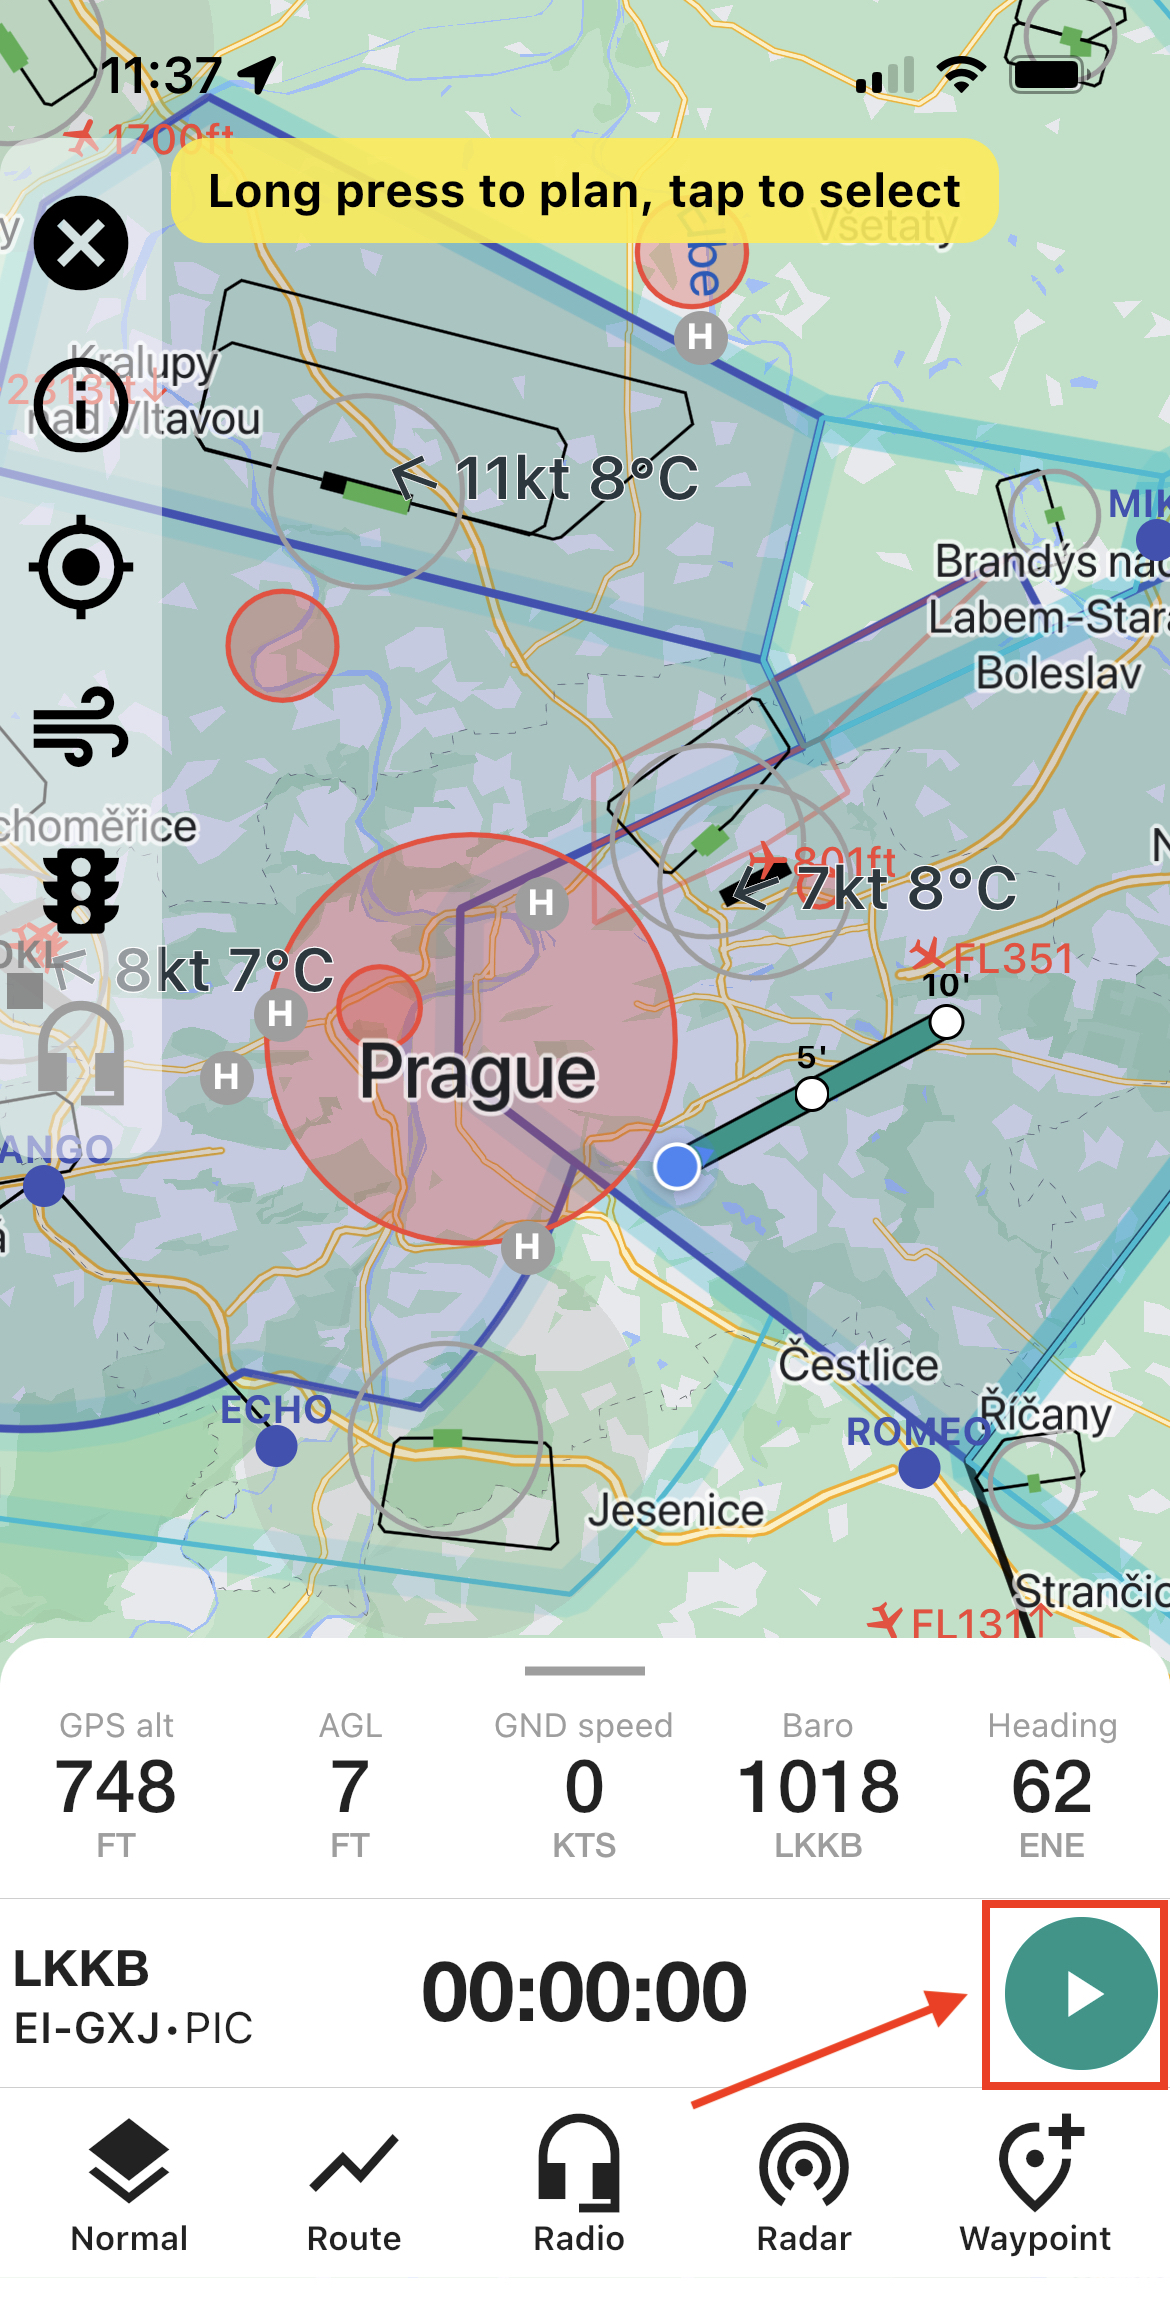 Flight recording in mobile app